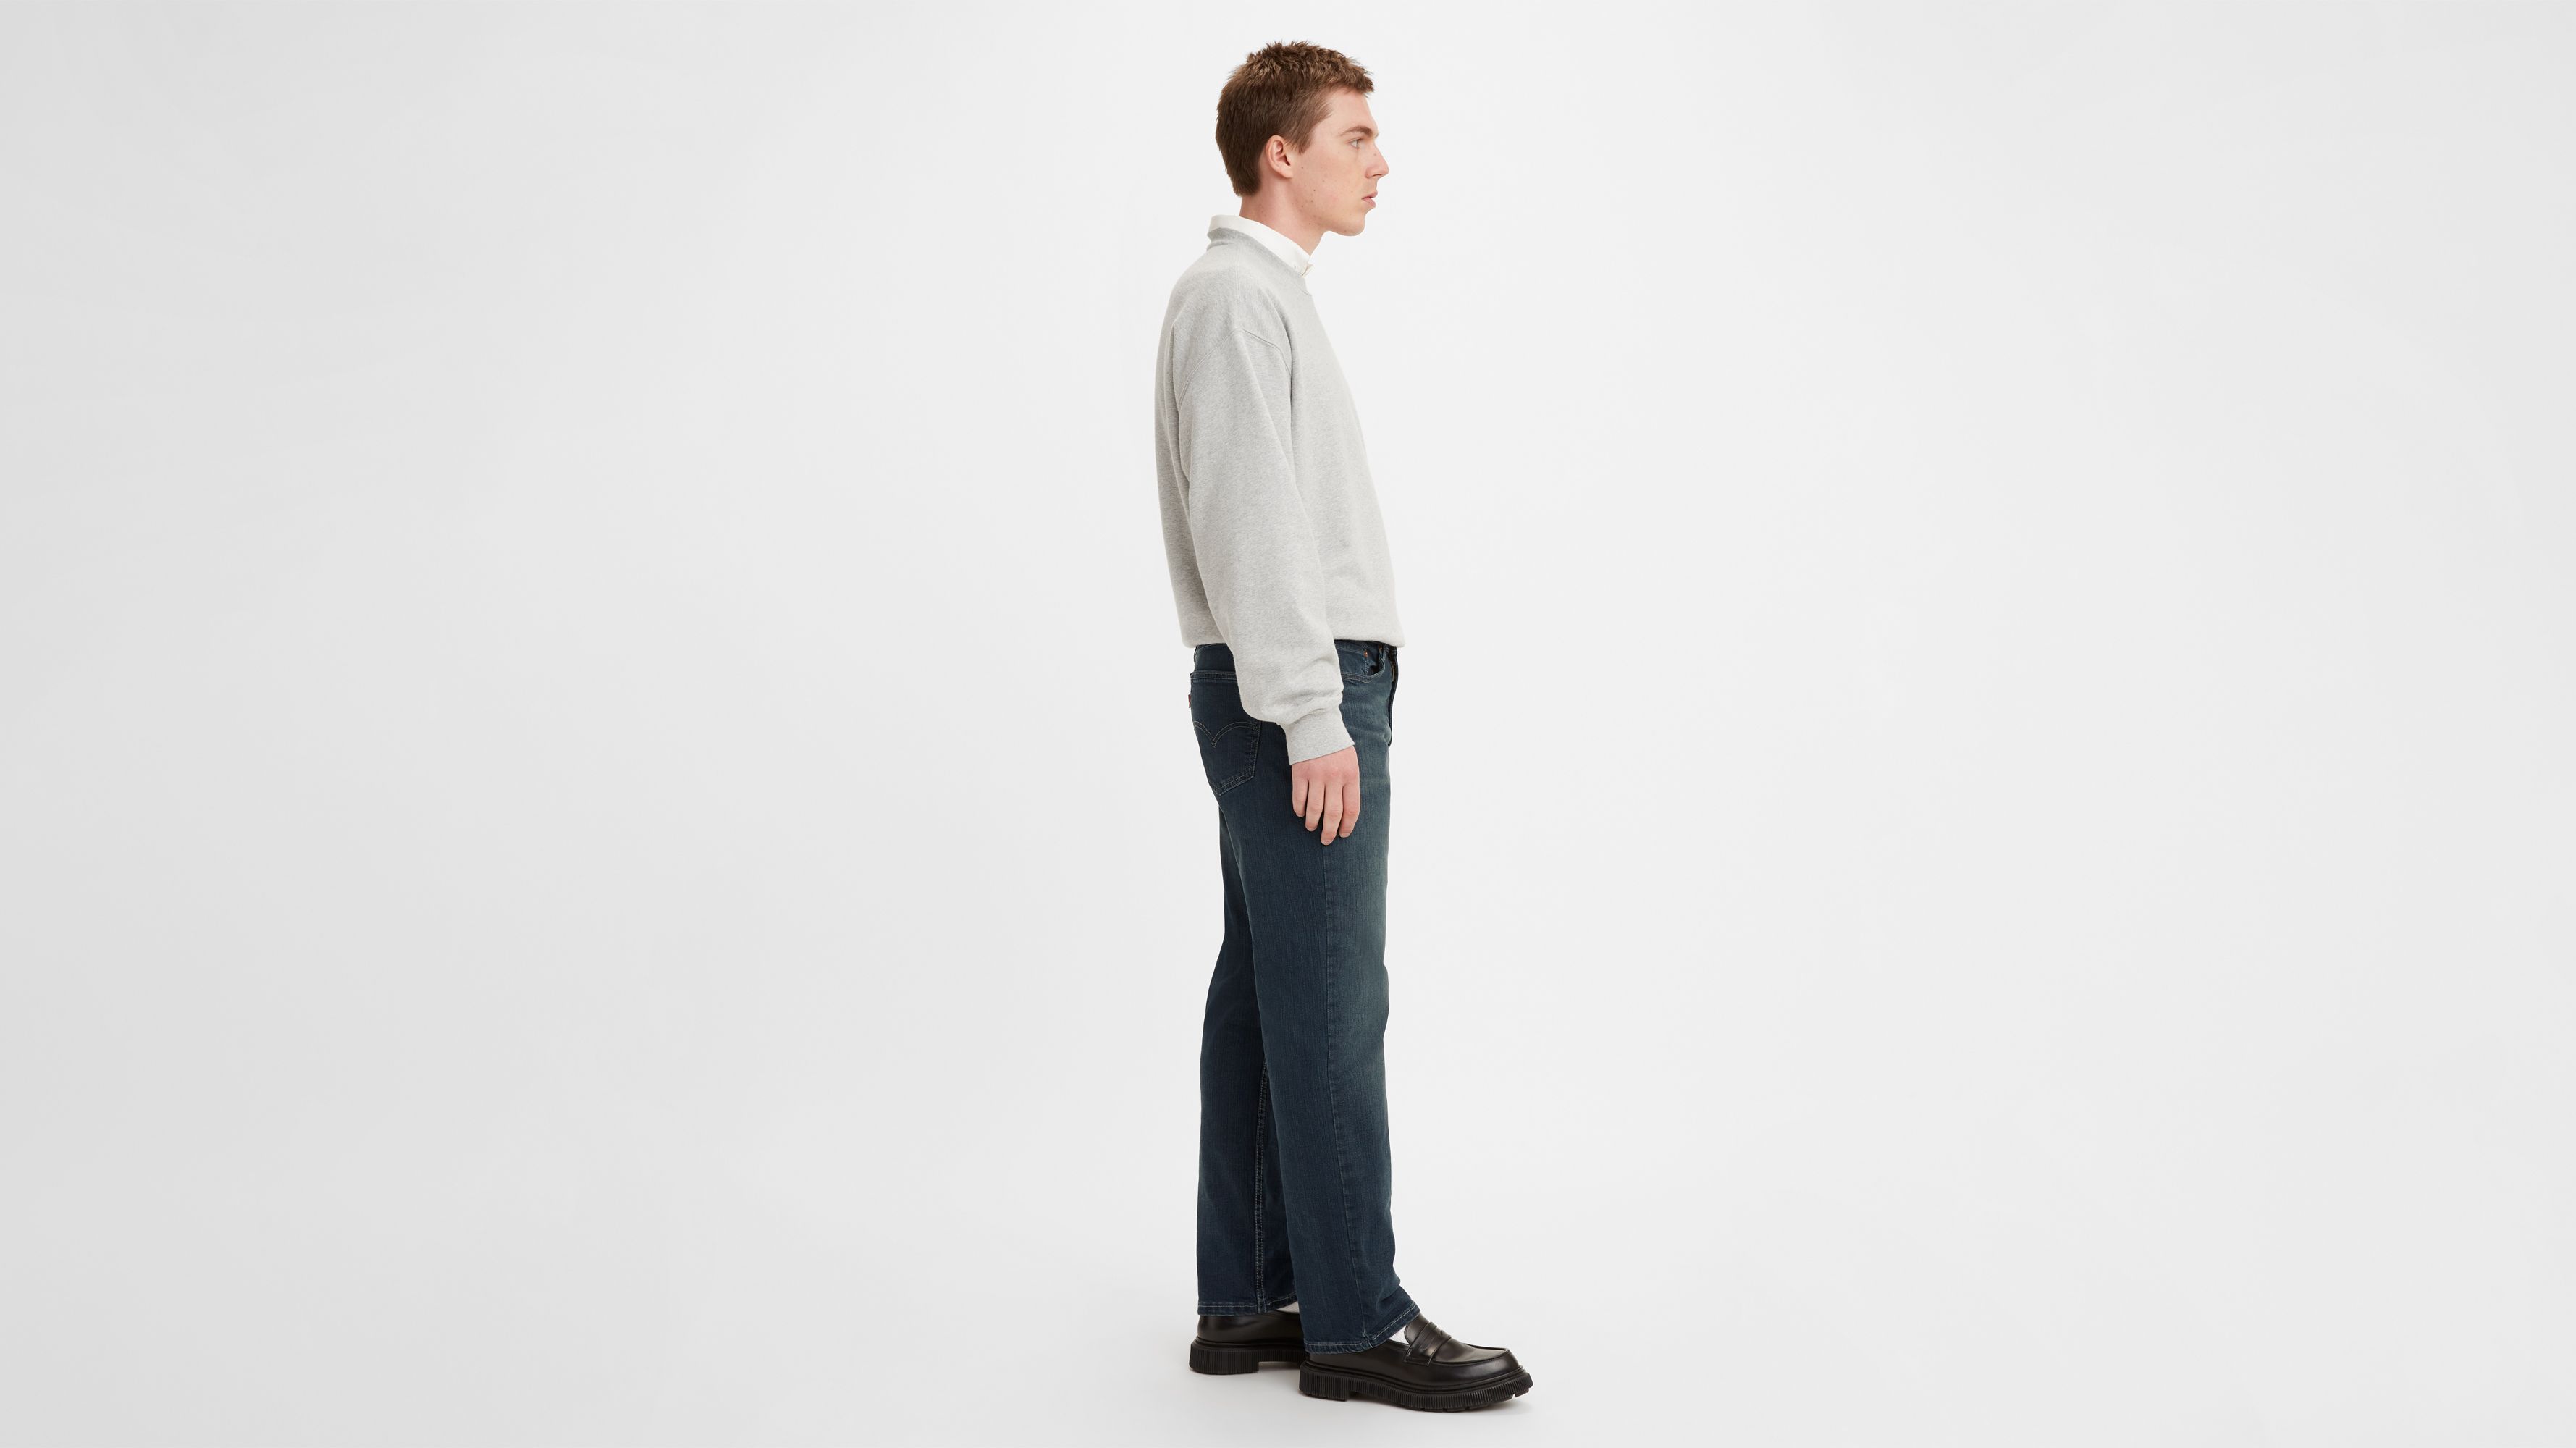 Situación diluido solitario 559™ Relaxed Straight Men's Jeans - Medium Wash | Levi's® US